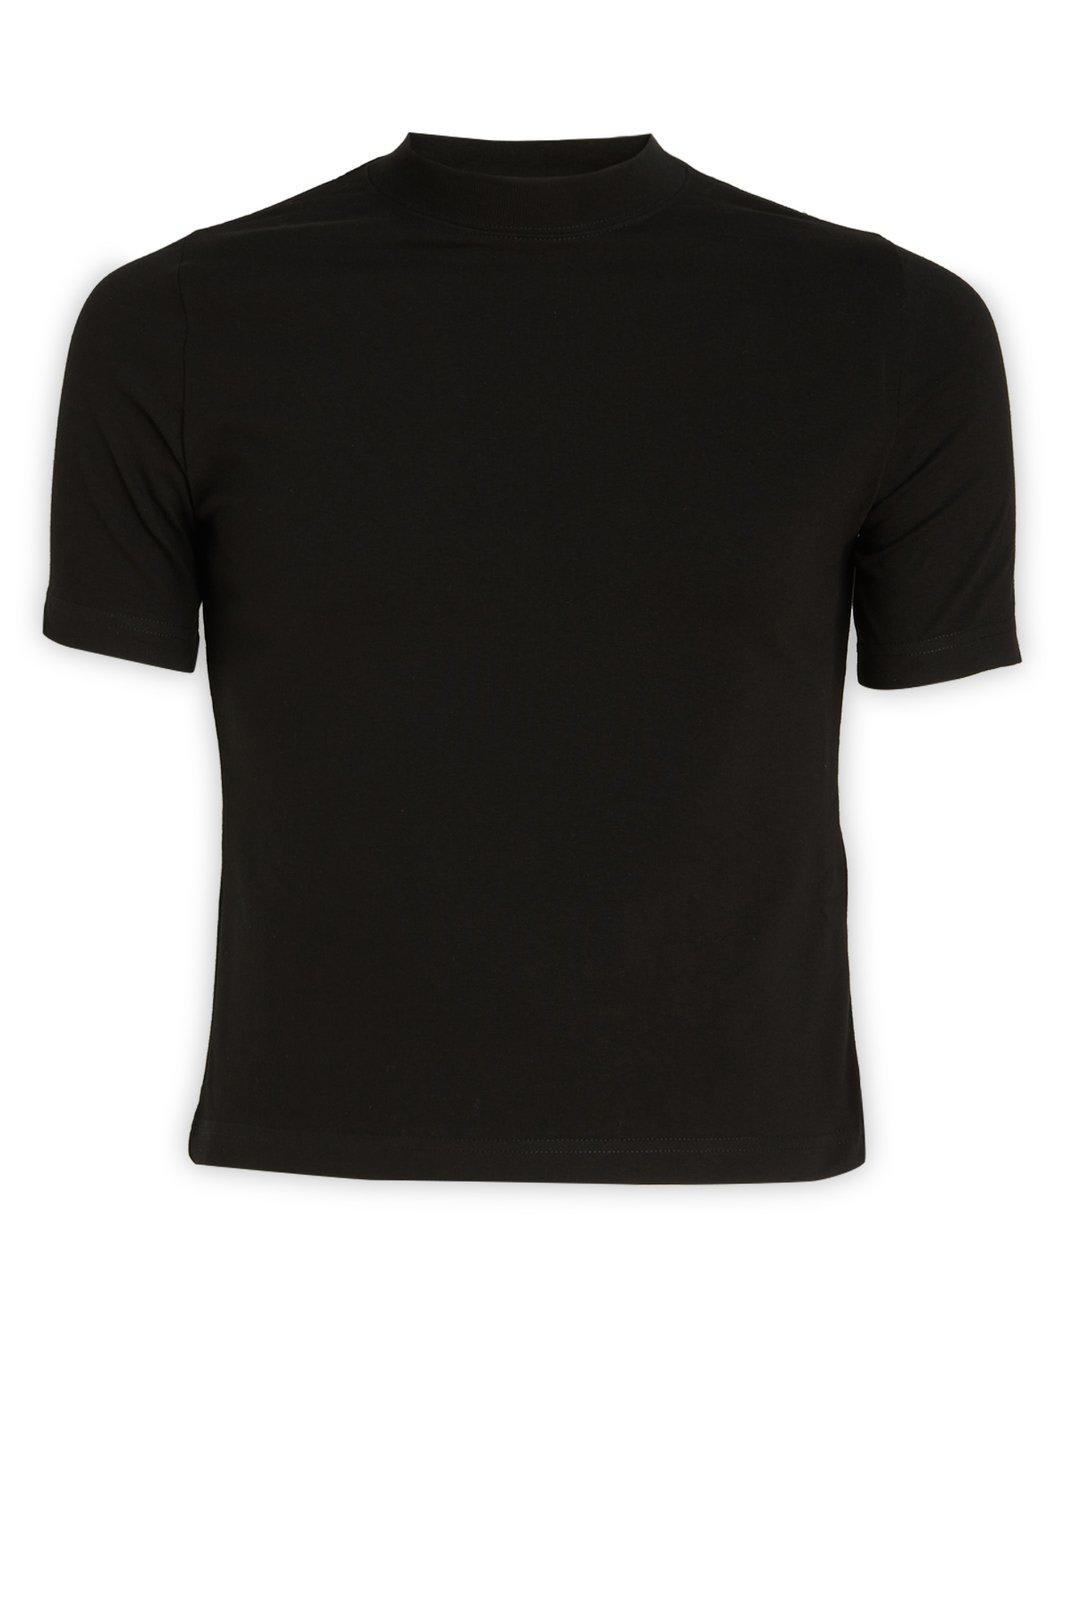 Balenciaga Mockneck Short-sleeved Top In Black